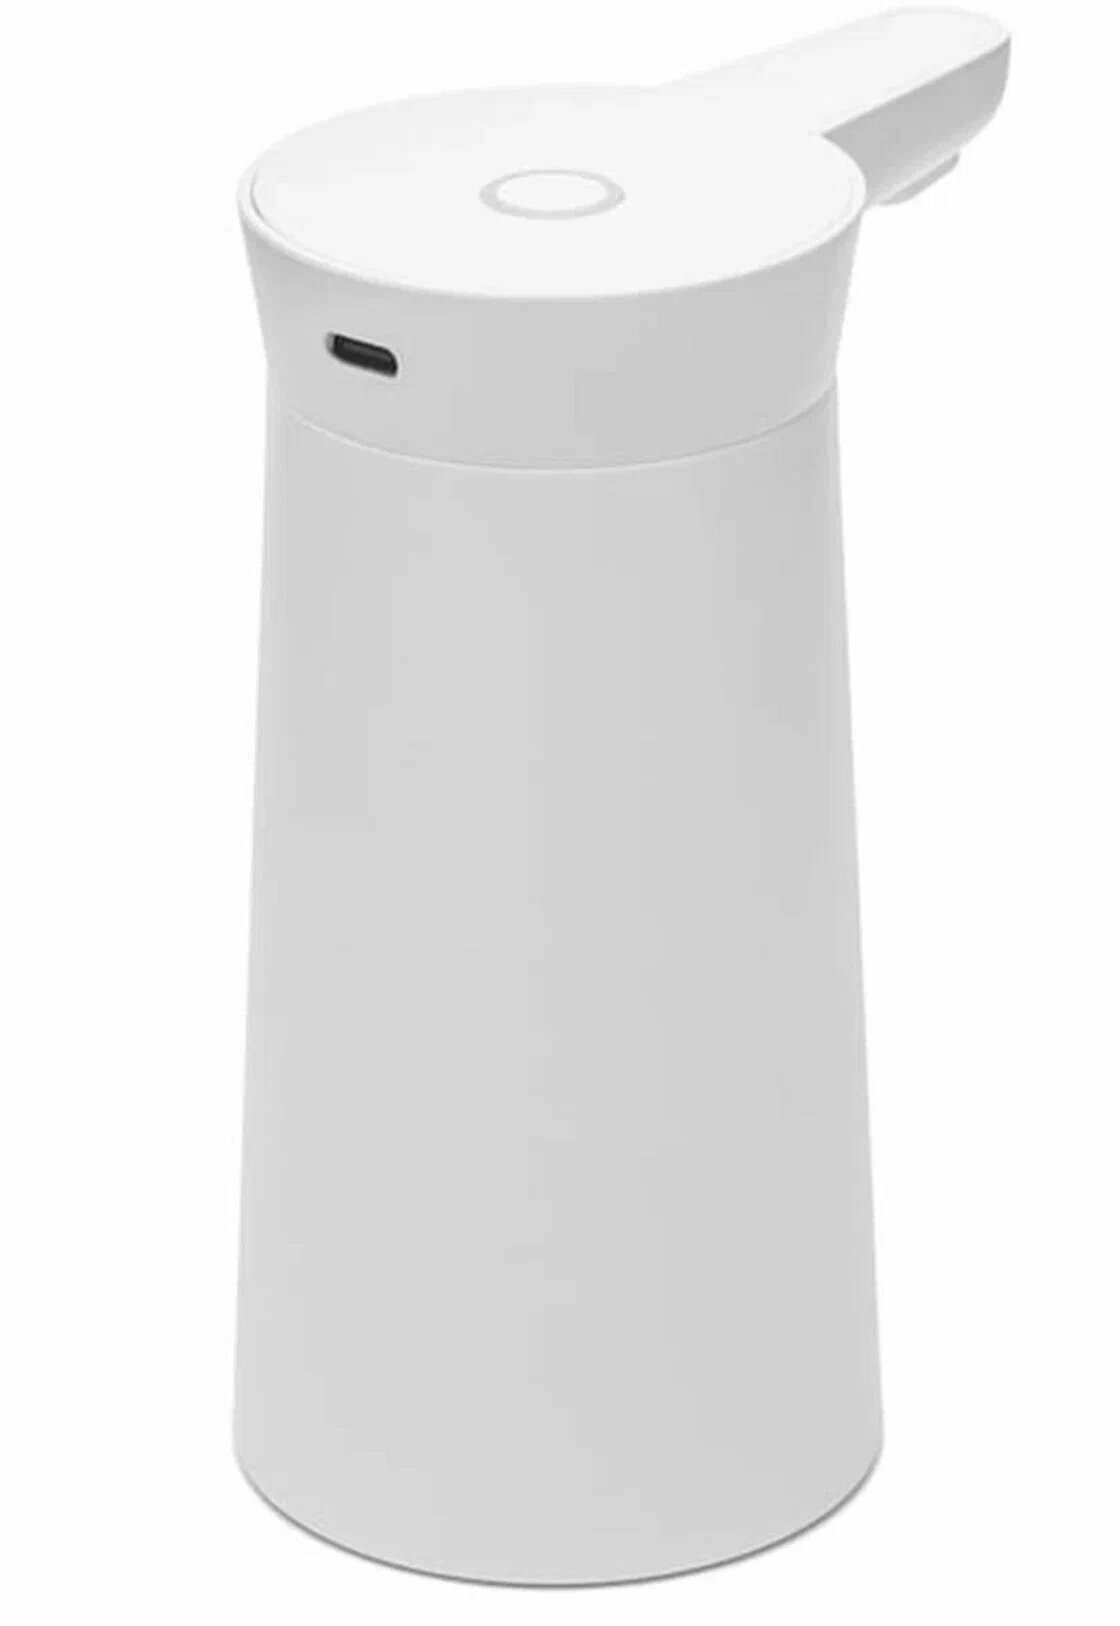 Помпа для воды Xiaomi Sothing Water Pump Wireless DSHJ-S-2004, white